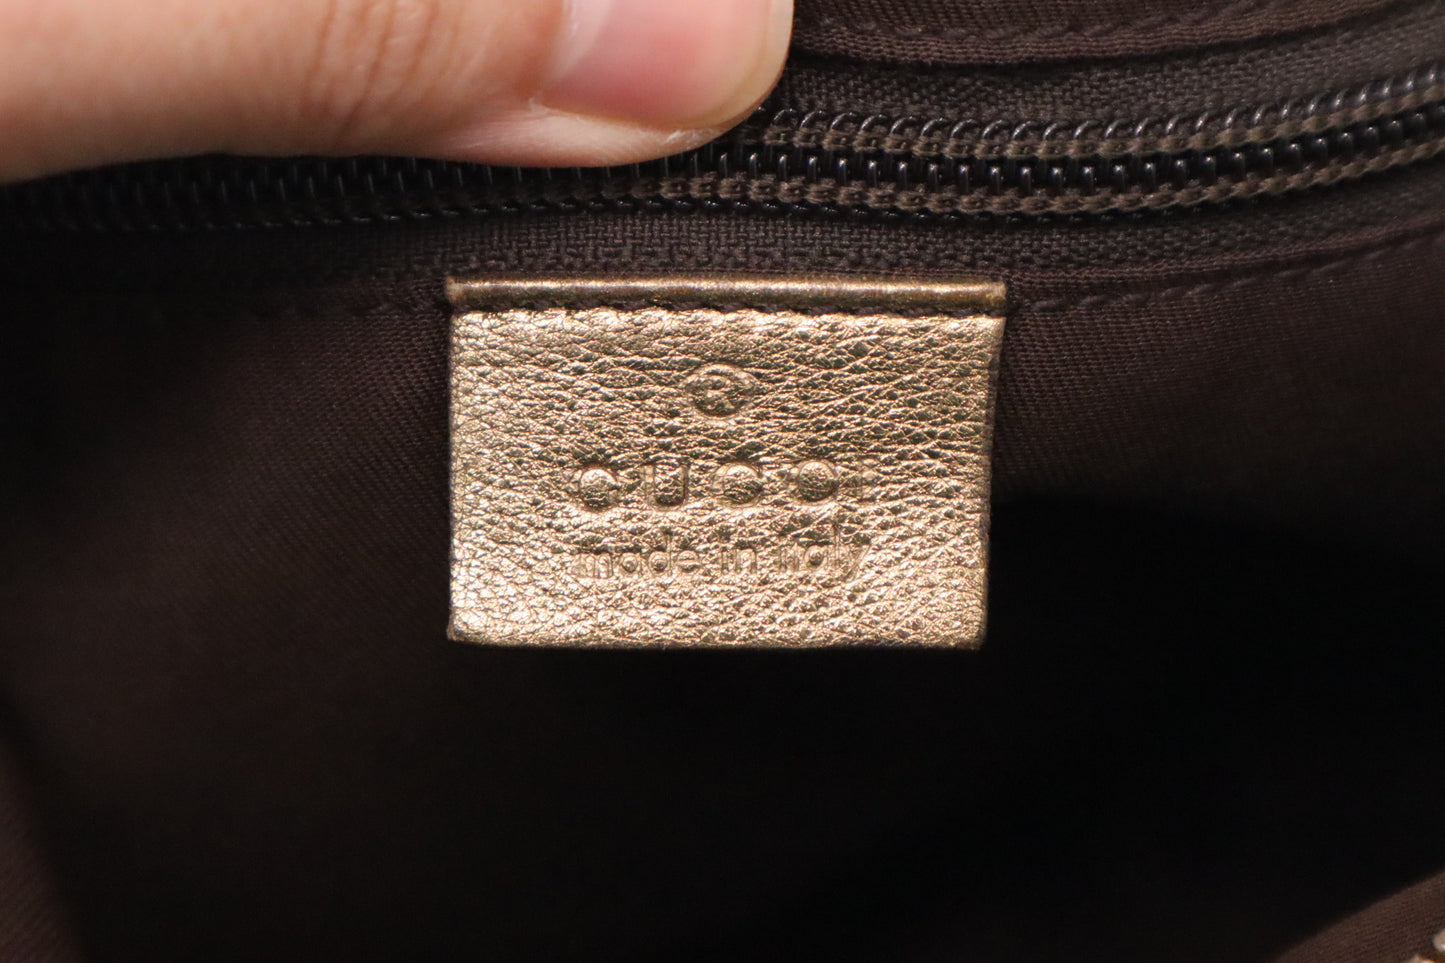 Gucci Shoulder Bag in Beige and Gold GG Supreme Canvas